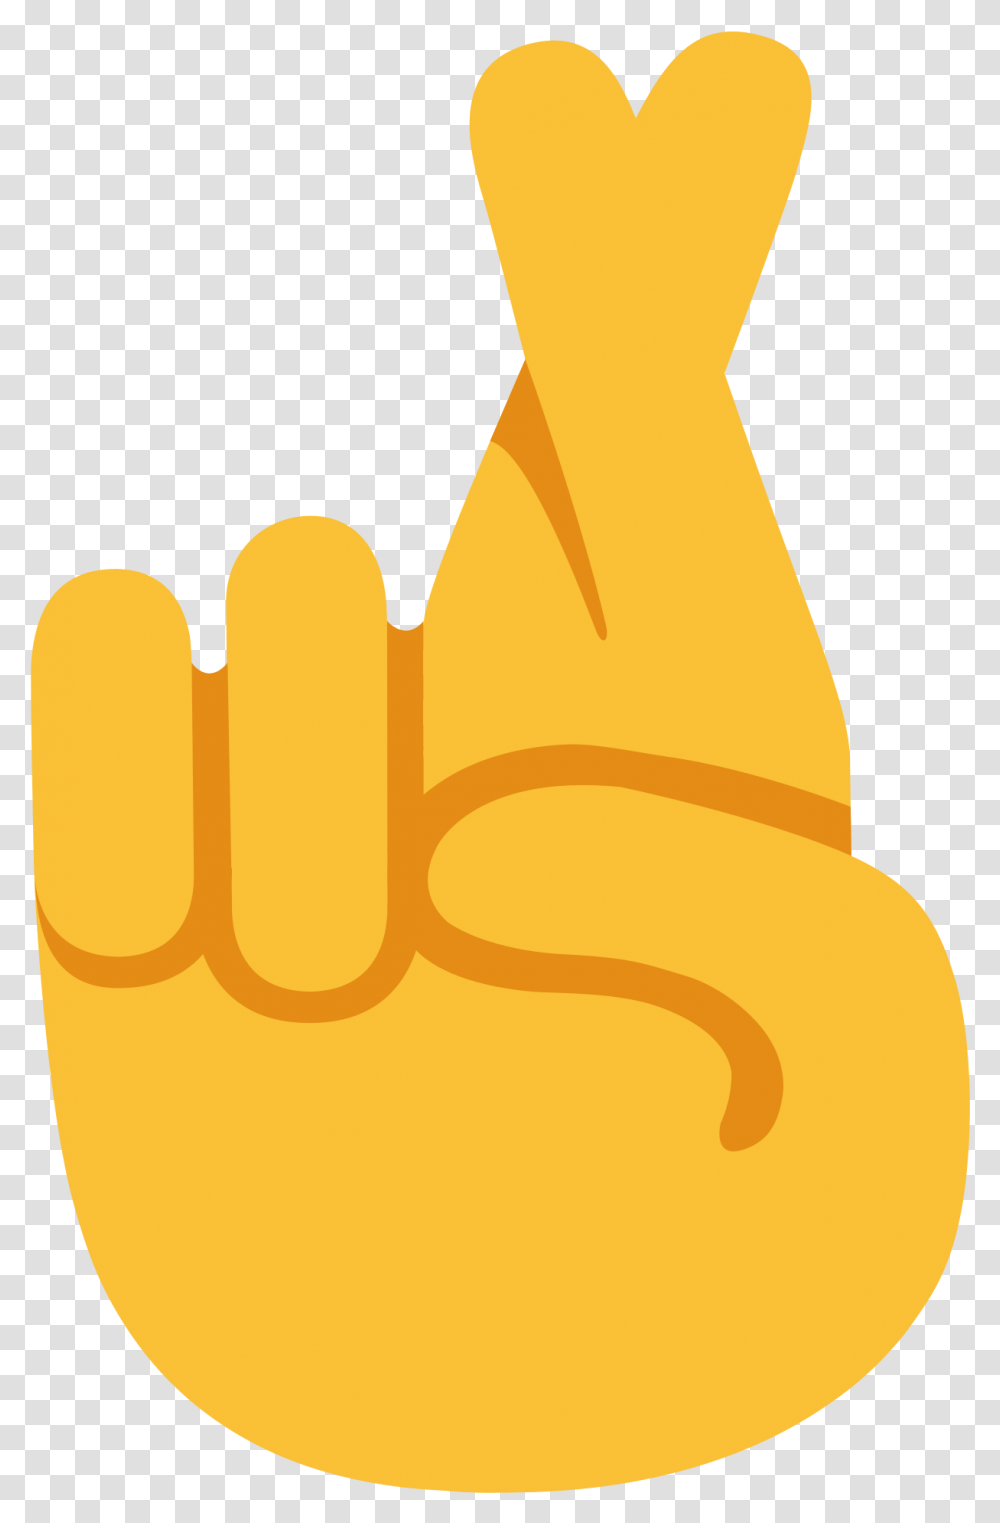 Crossed Fingers Emoji Clipart Download Fingers Crossed Emoji, Hand, Food, Fist, Sweets Transparent Png